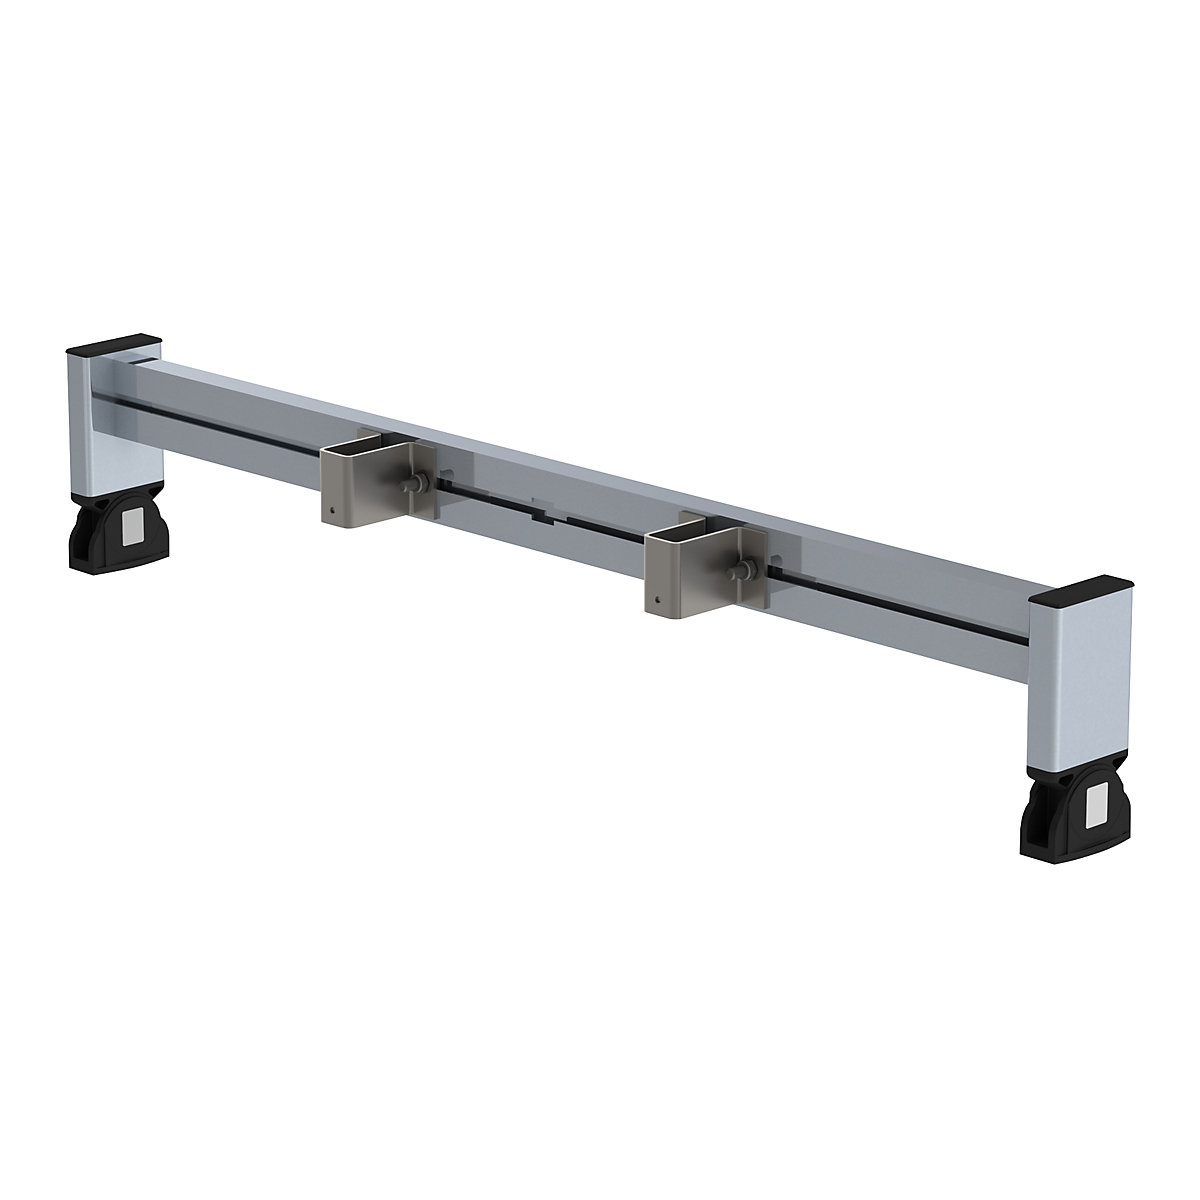 Retrofit crossbar – MUNK, length 930 mm, for rail 58 x 25 mm, with nivello® ladder feet-2